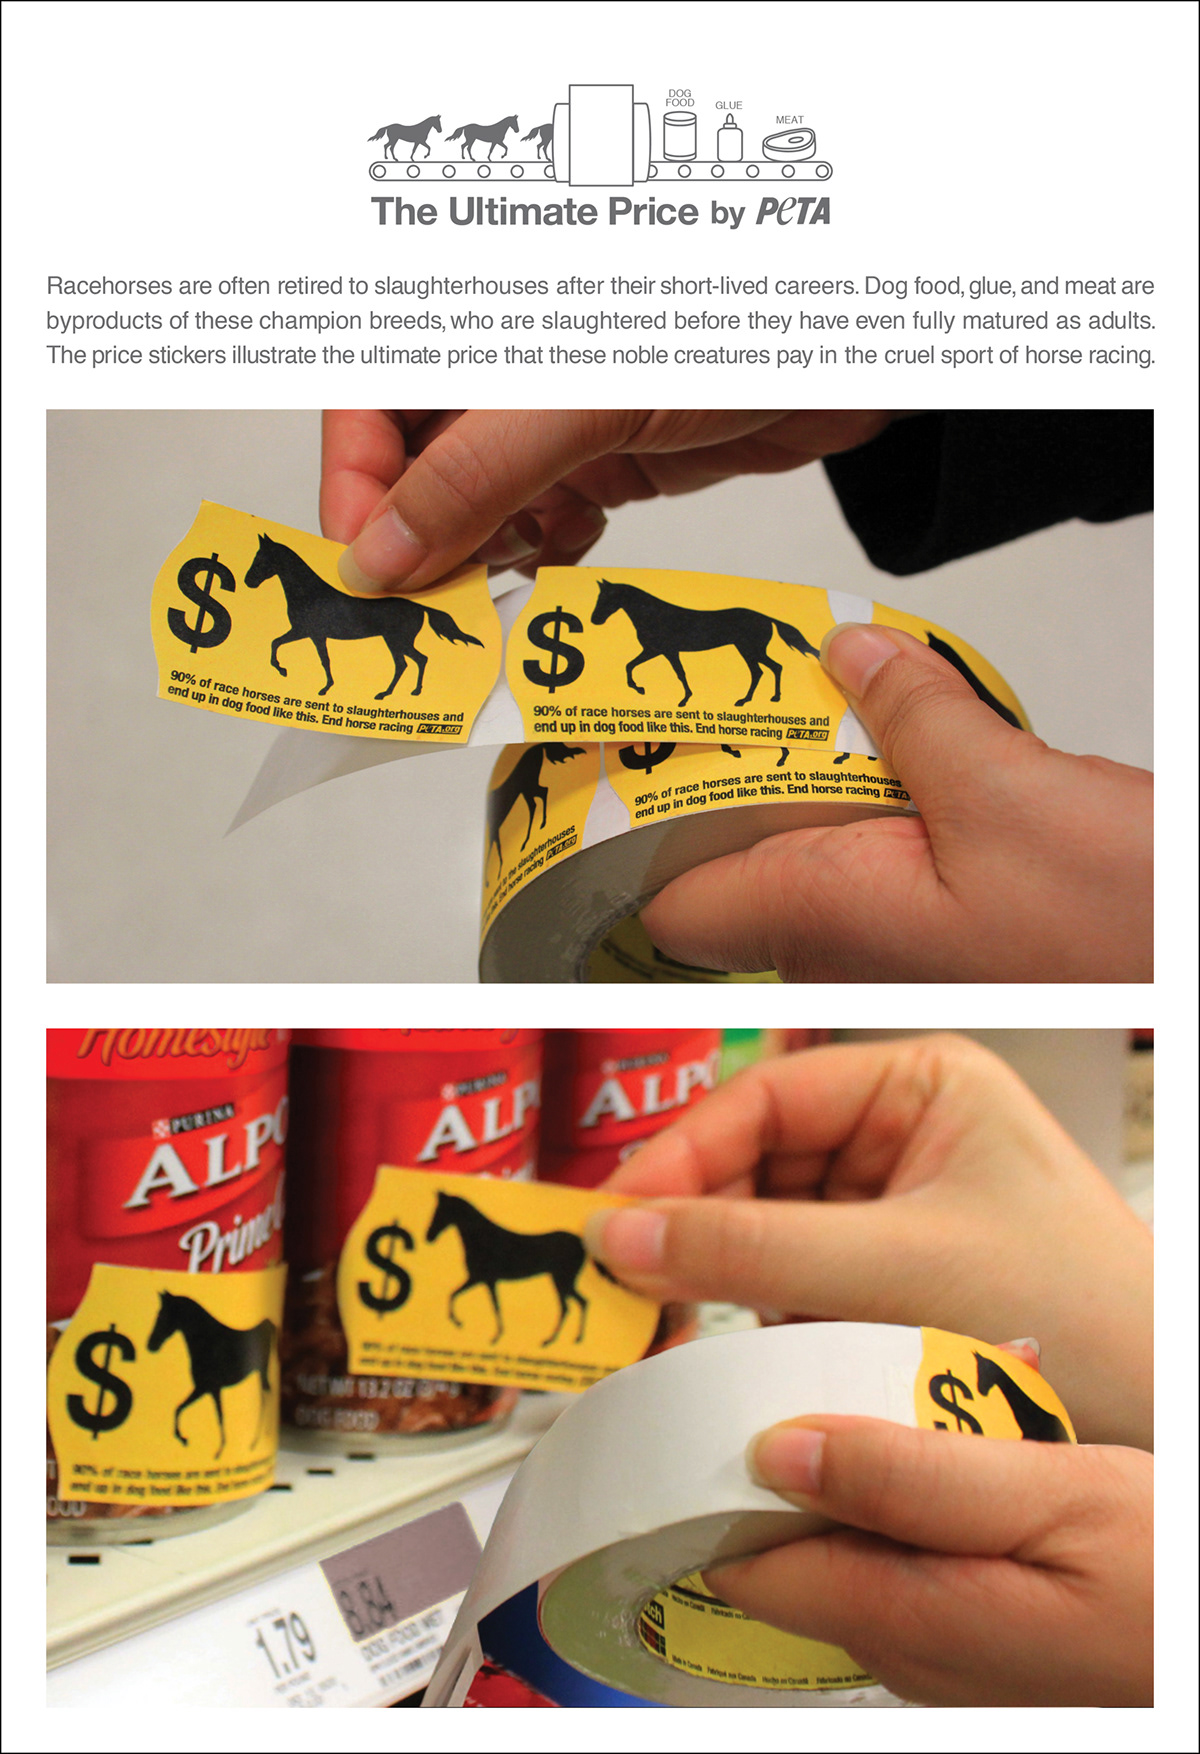 Peta Horse racing price sticker Guerrilla Advertising guerrilla dog food Glue meat